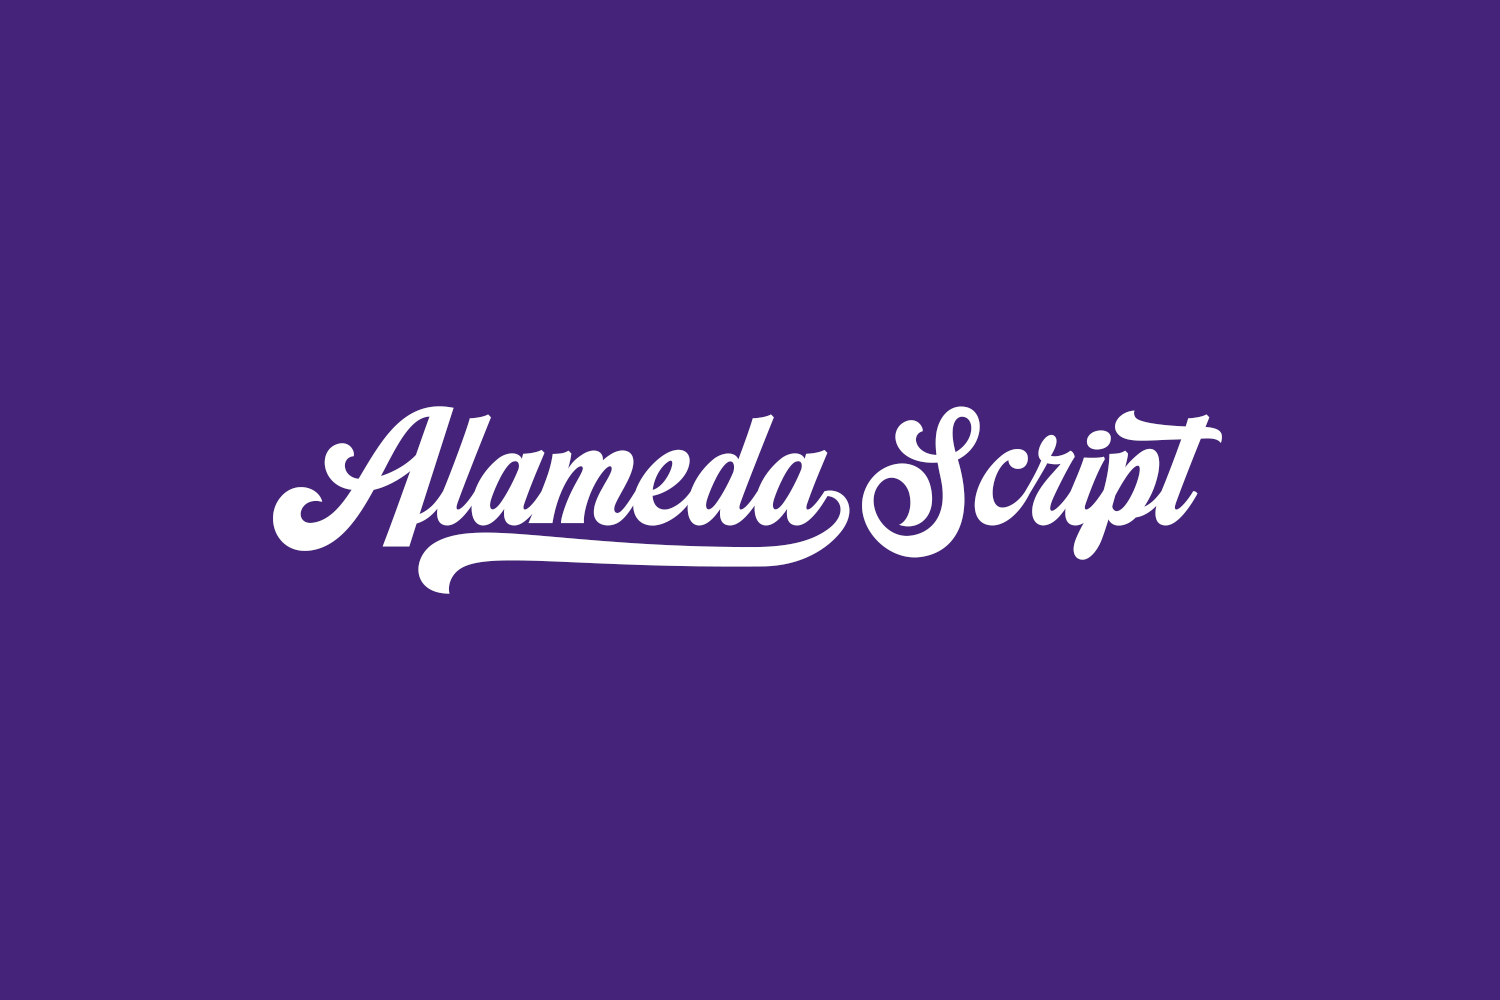 Alameda Script Free Font